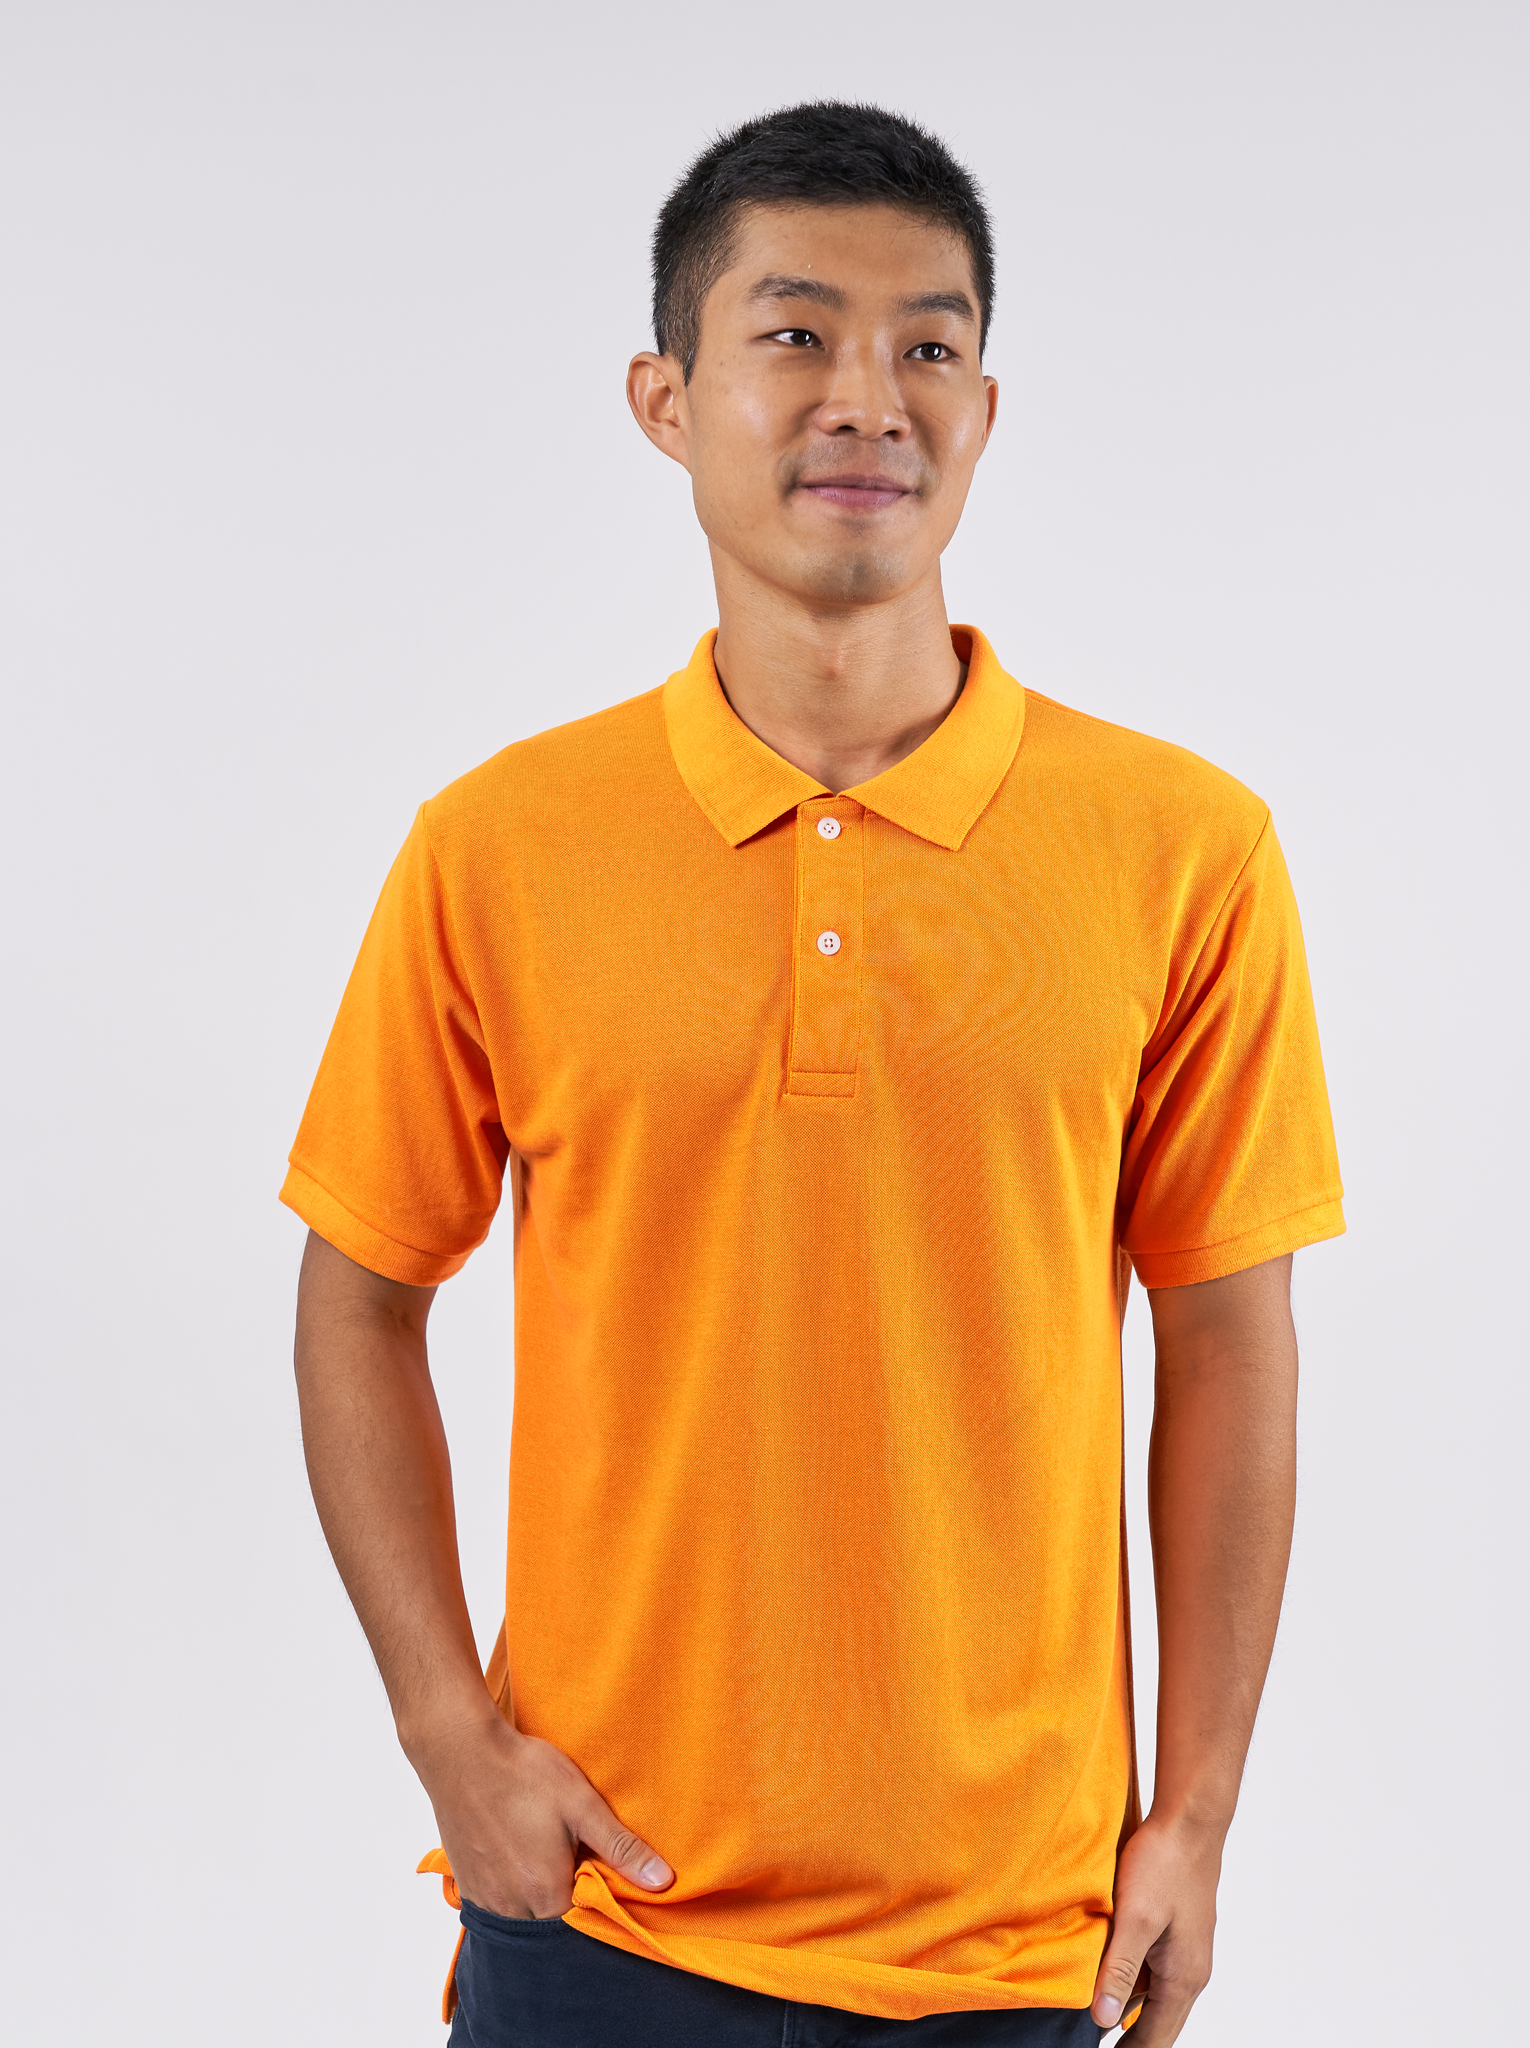 Polo Shirt เสื้อโปโล (Orange, สีส้ม)(Unisex)